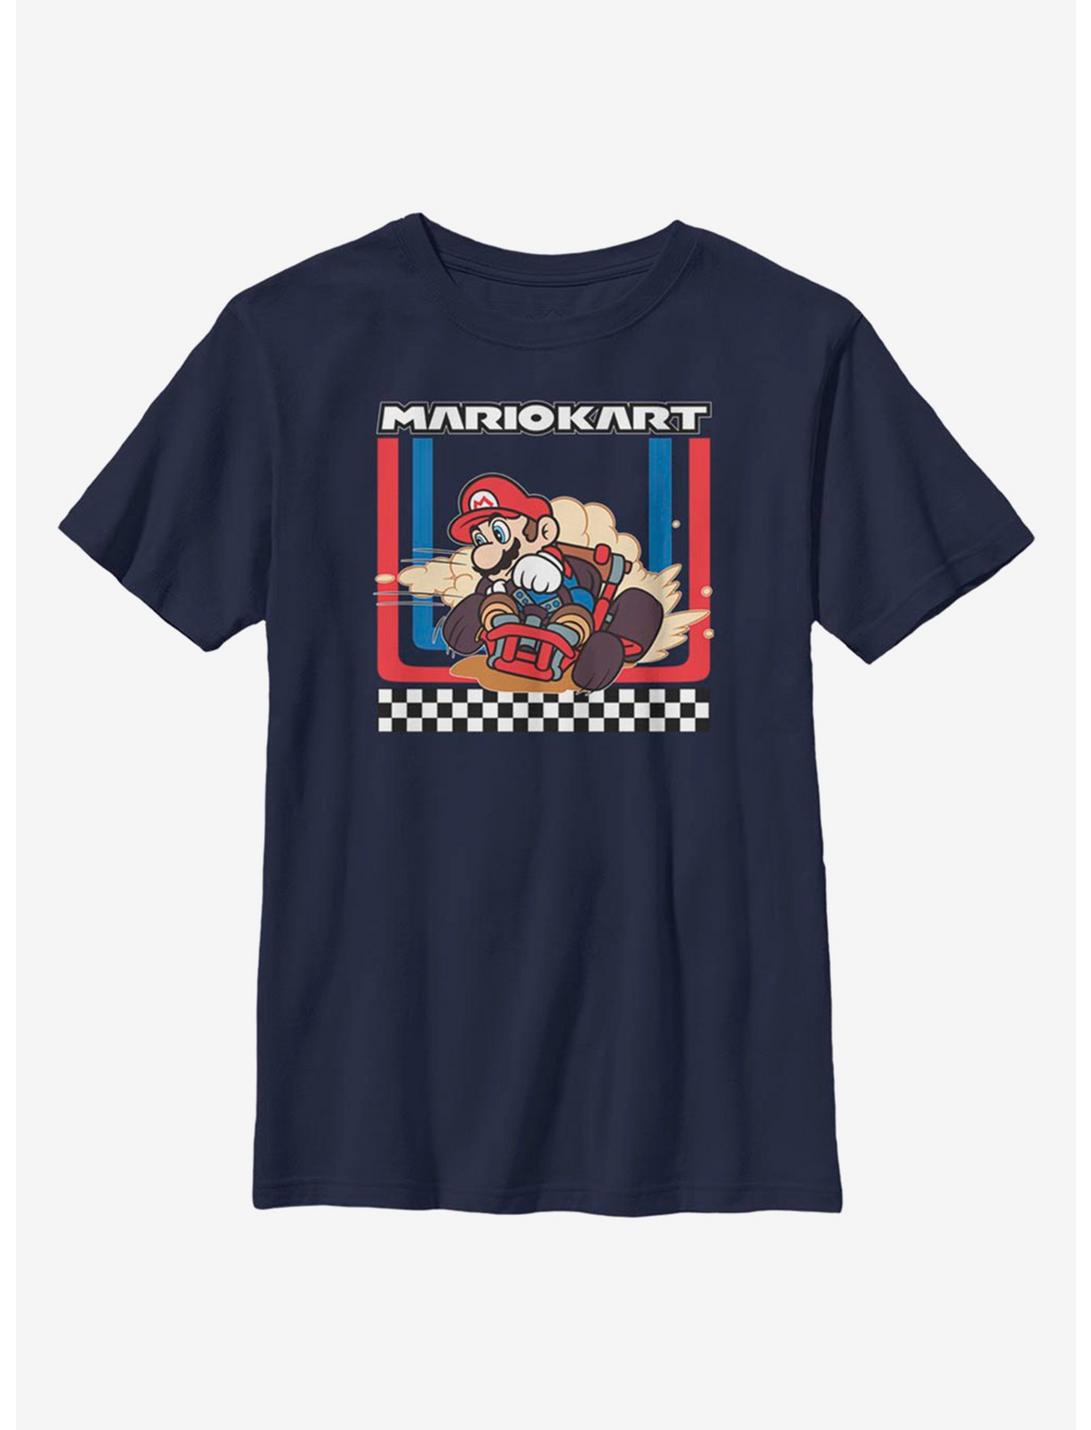 Nintendo Super Mario Kartin' Youth T-Shirt, NAVY, hi-res